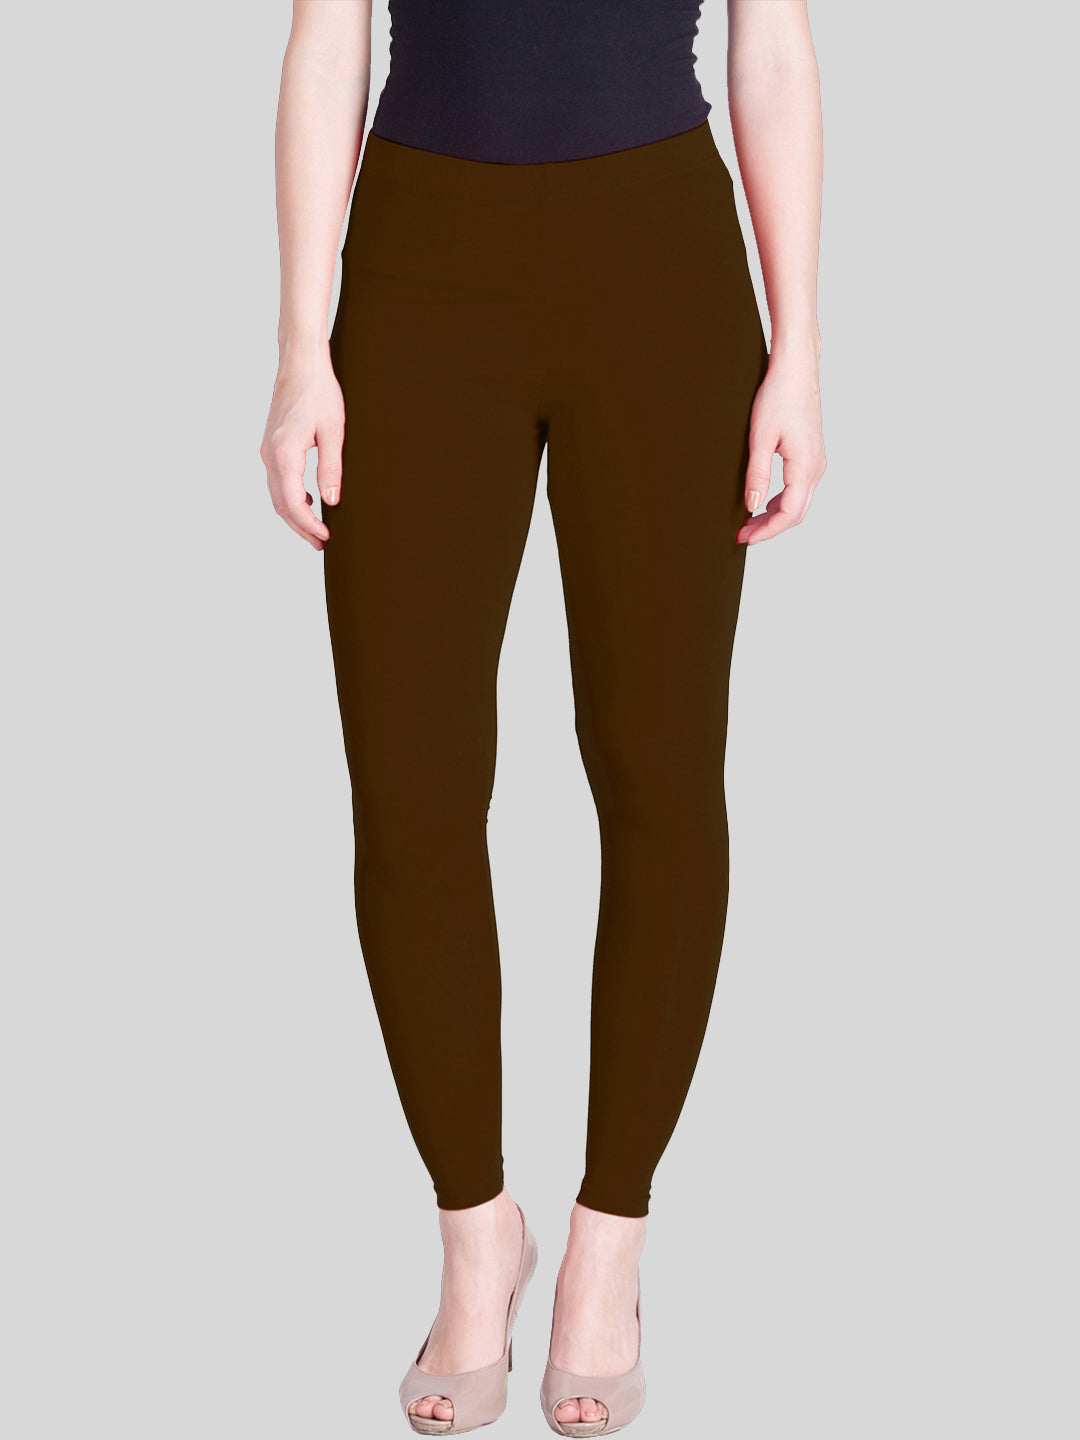 Brown Color Women Cotton Stretchable Ankle Length Legging-LGA58